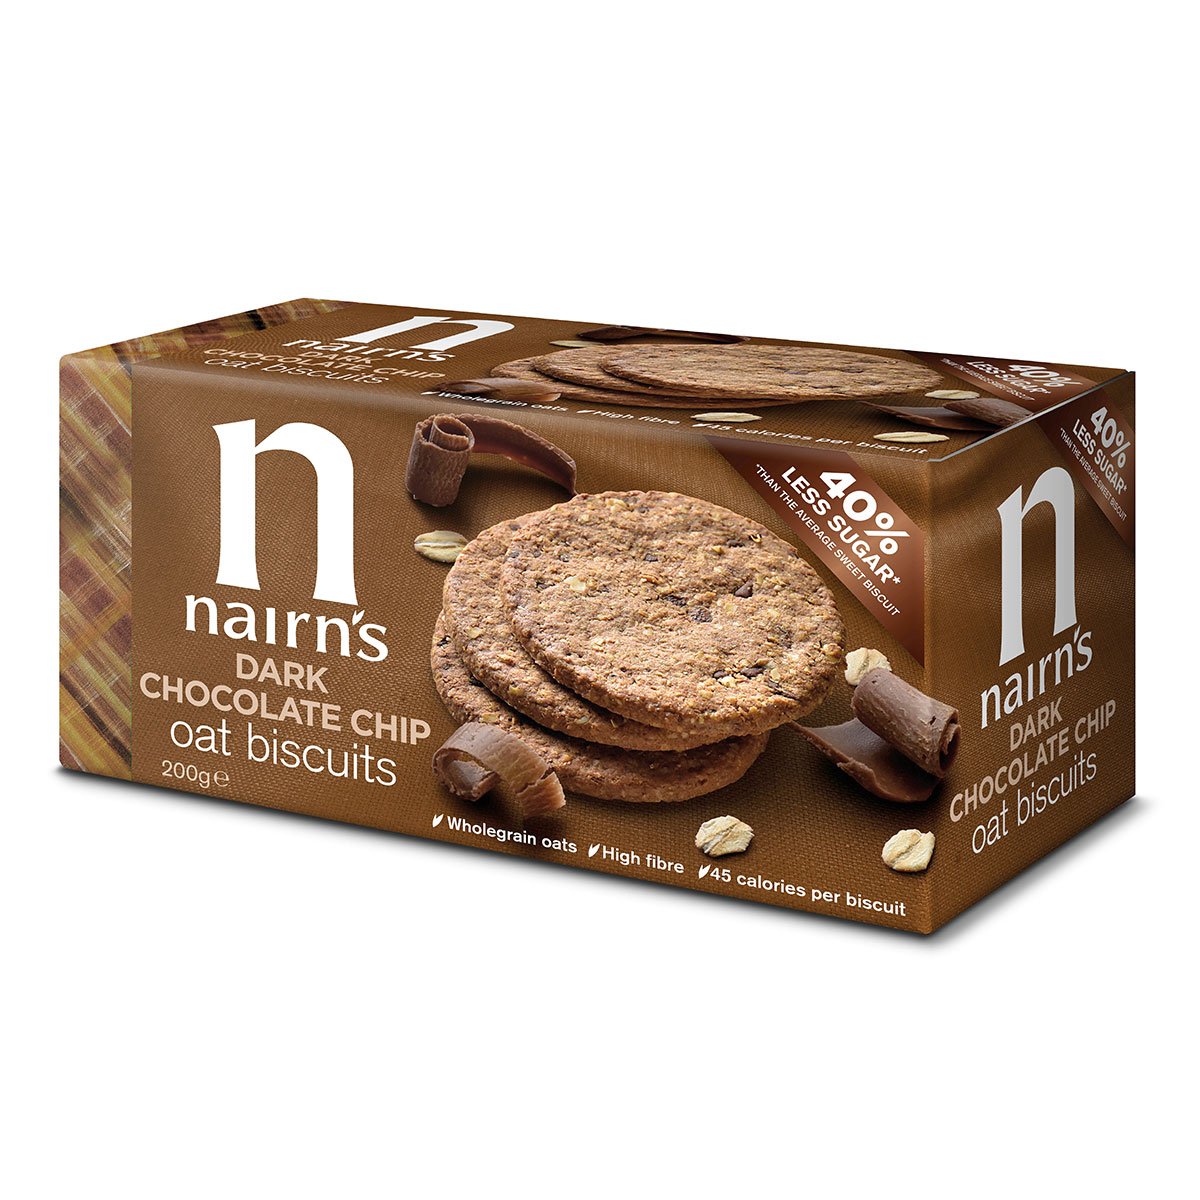 Nairns Dark Chocolate Chip Biscuits, 200g - Just Natural